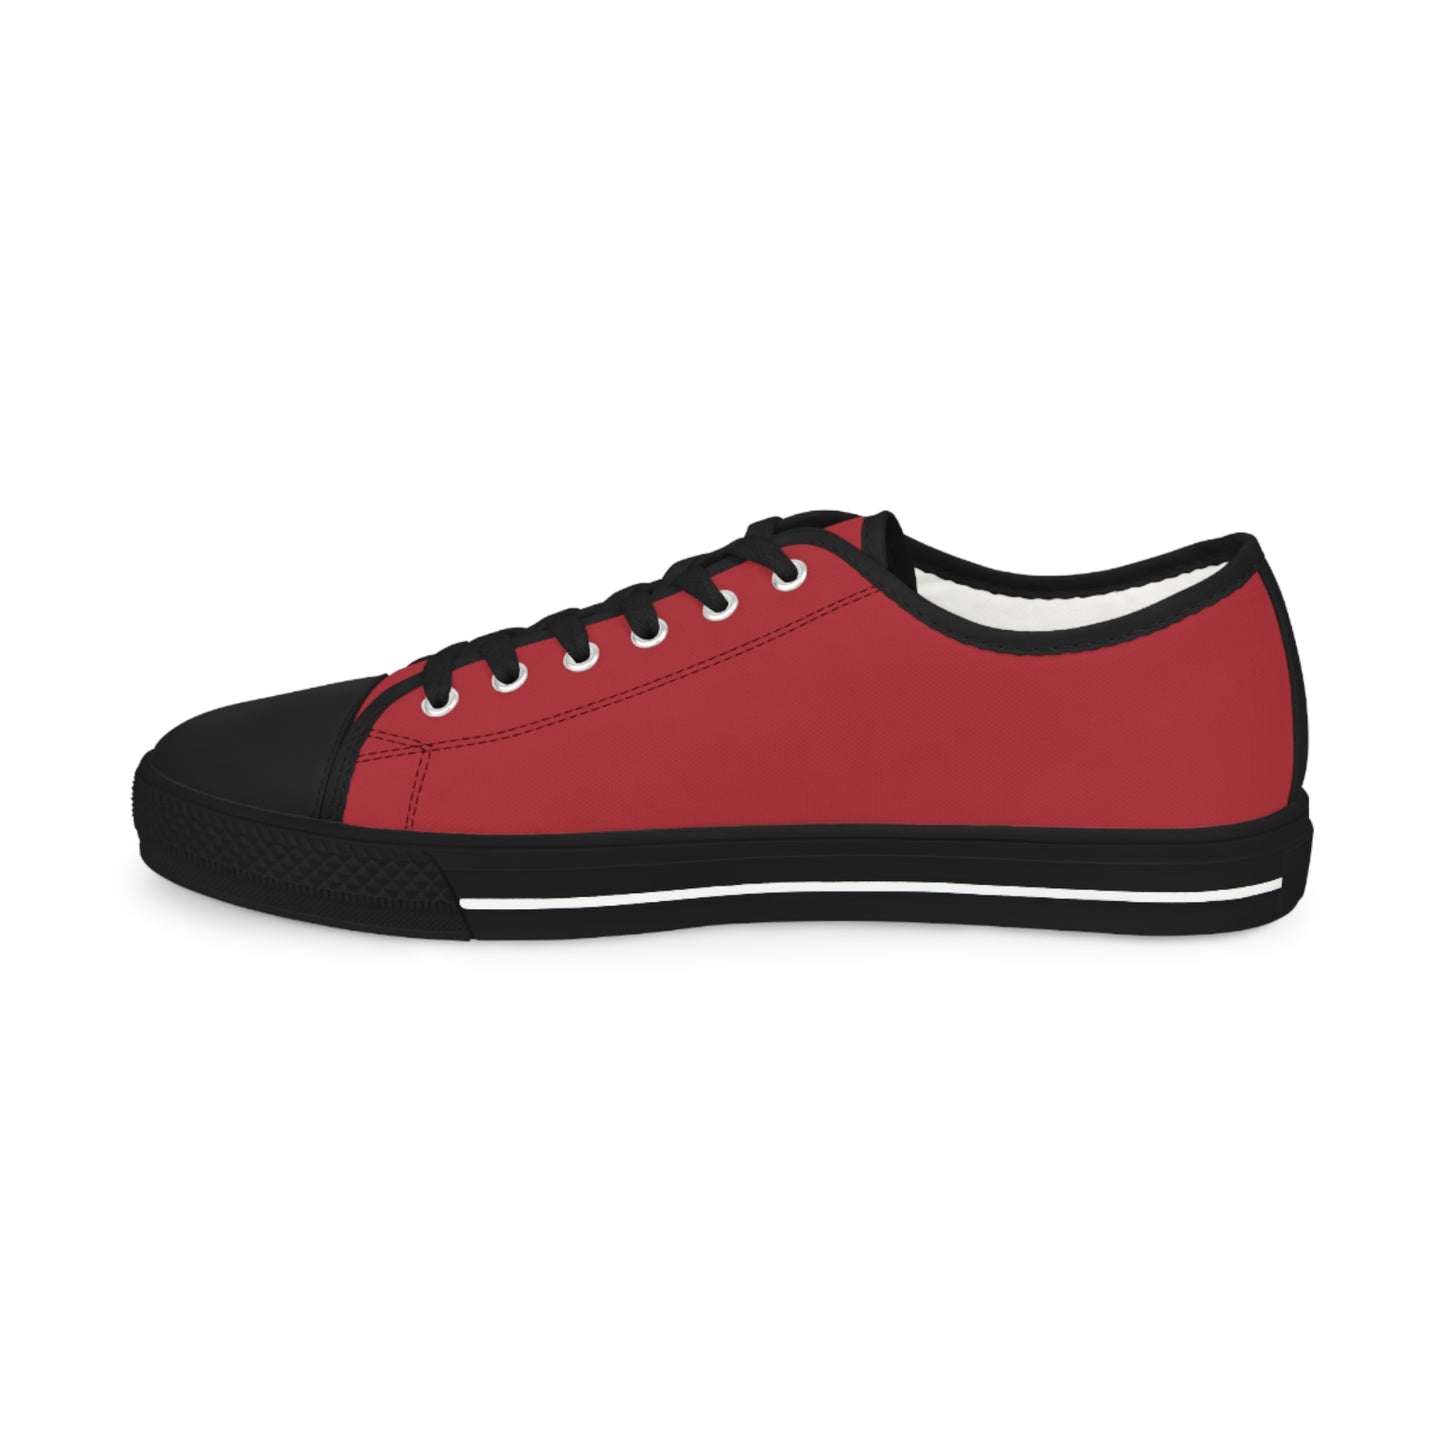 Men's Low Top Sneakers - Red US 14 Black sole